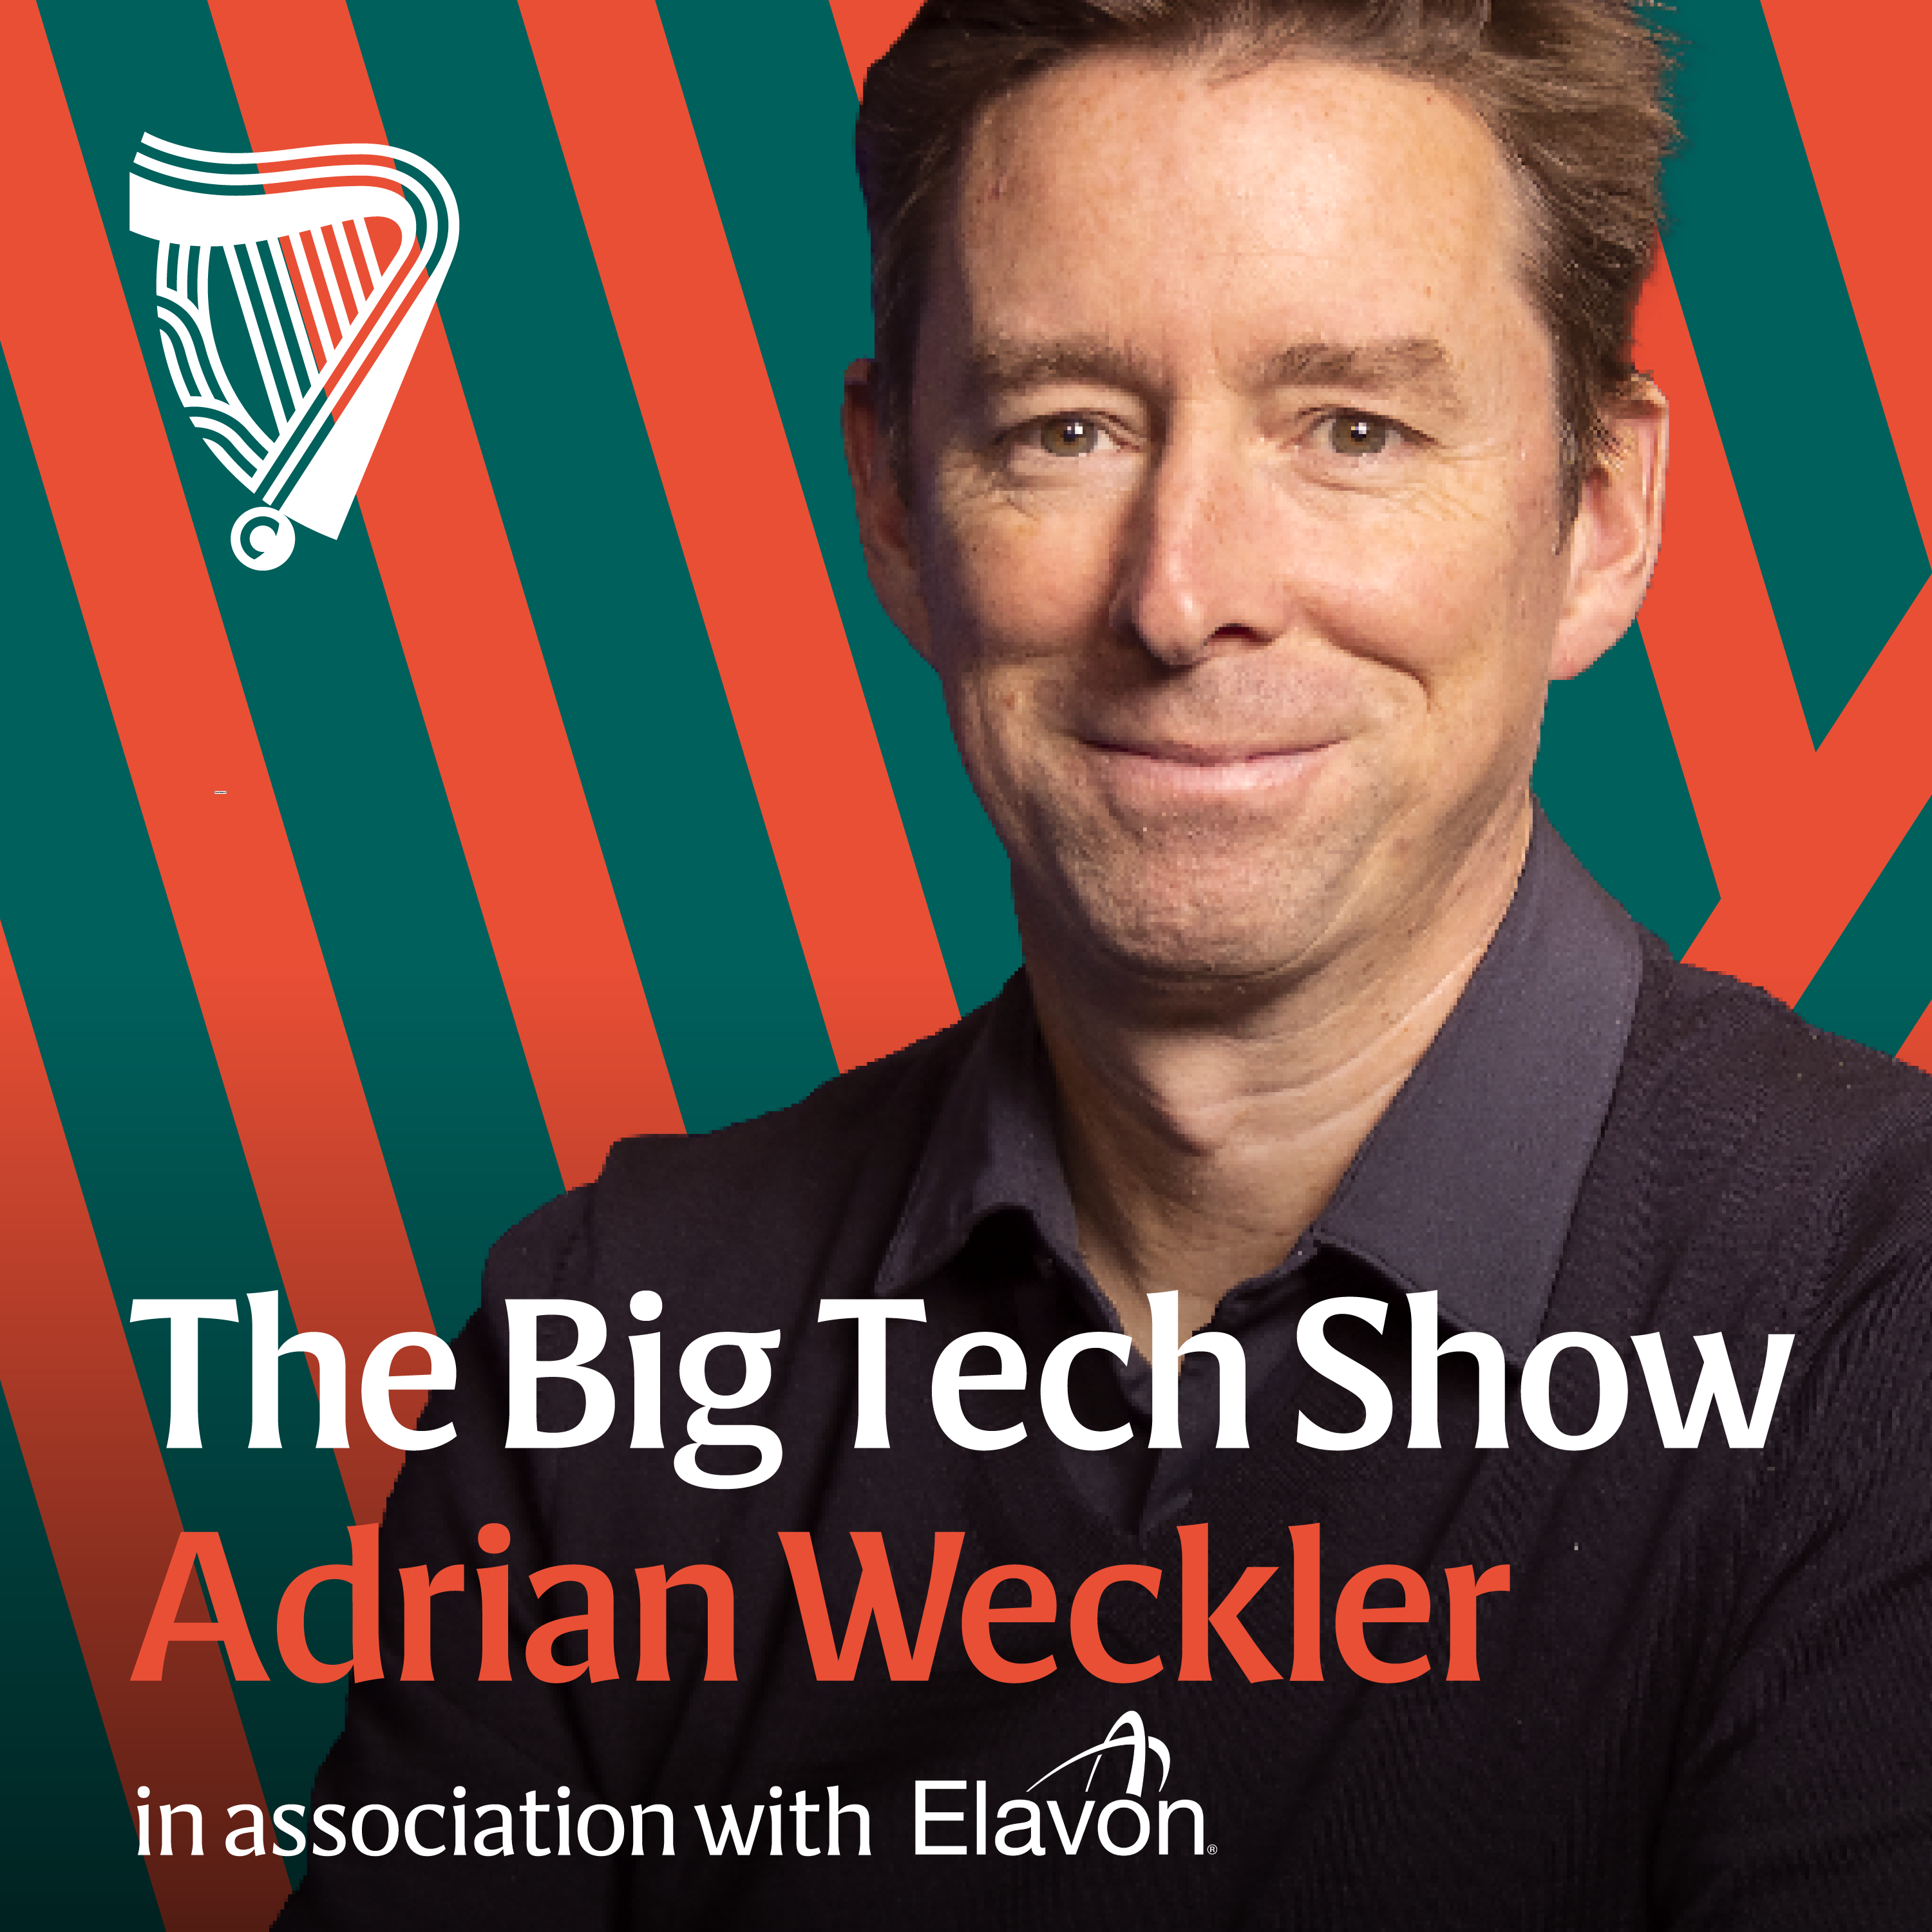 The Big Tech Show